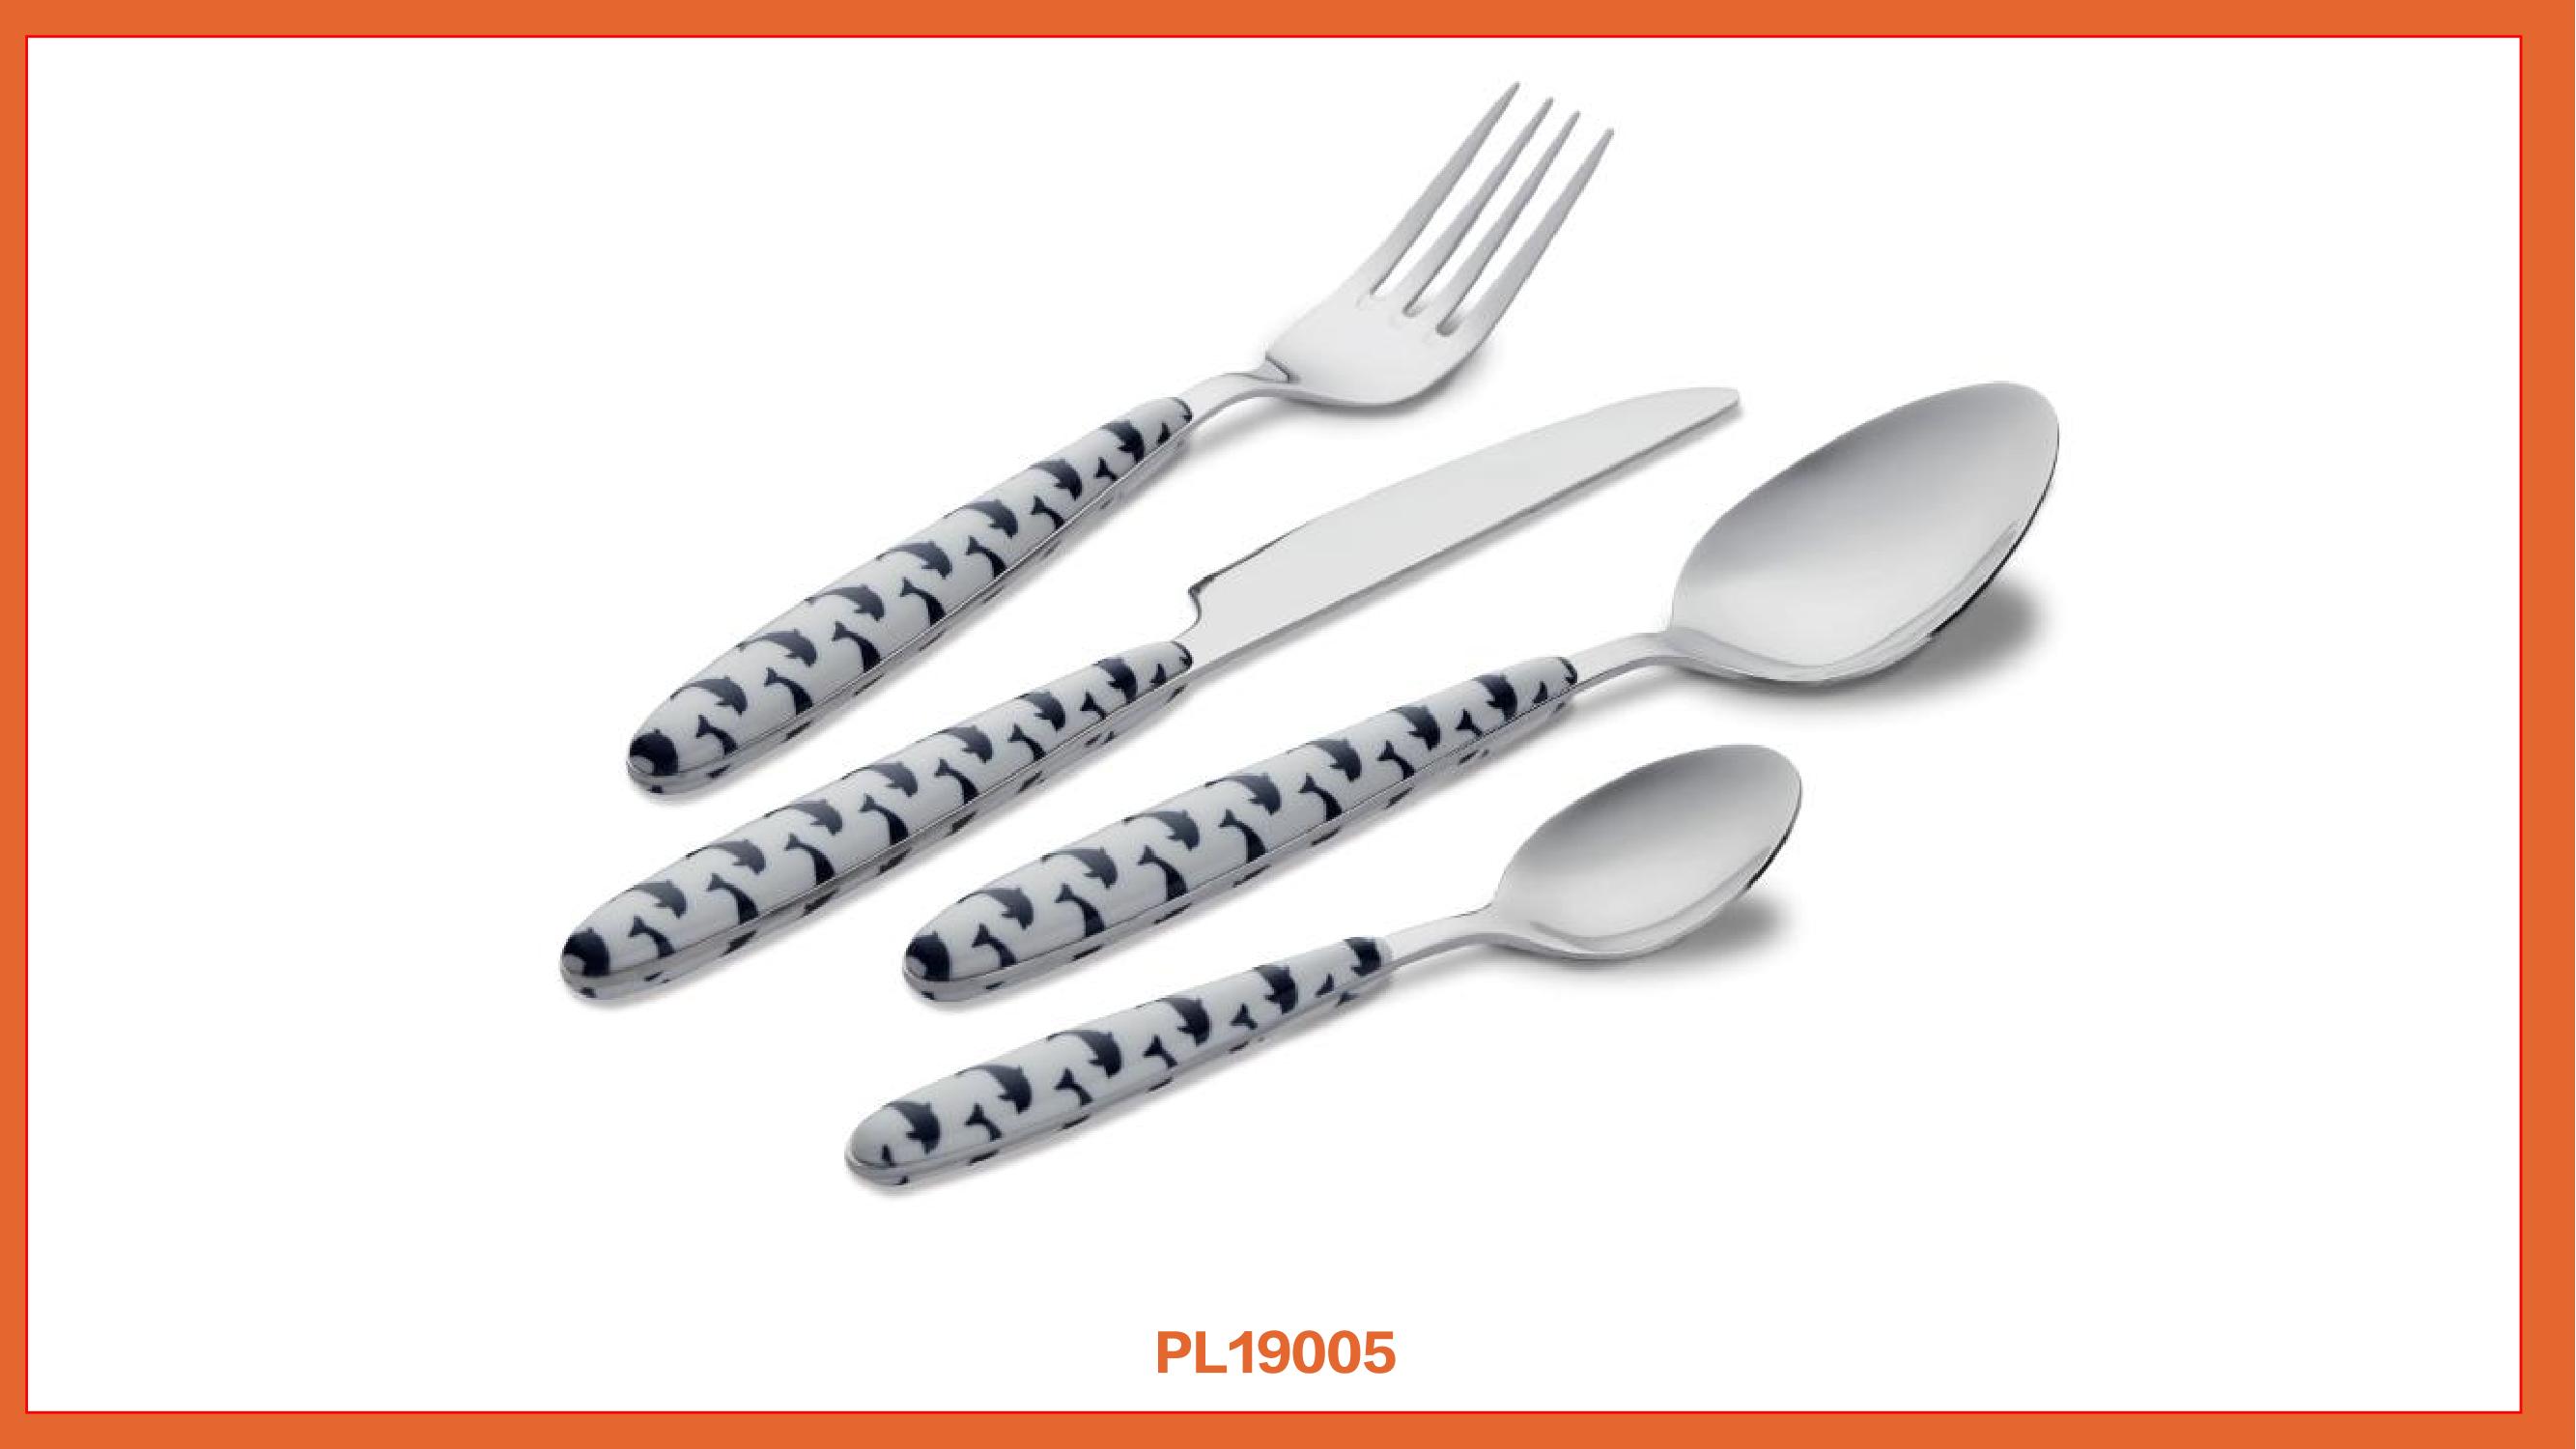 catalogue of plastic handle cutlery_19.jpg